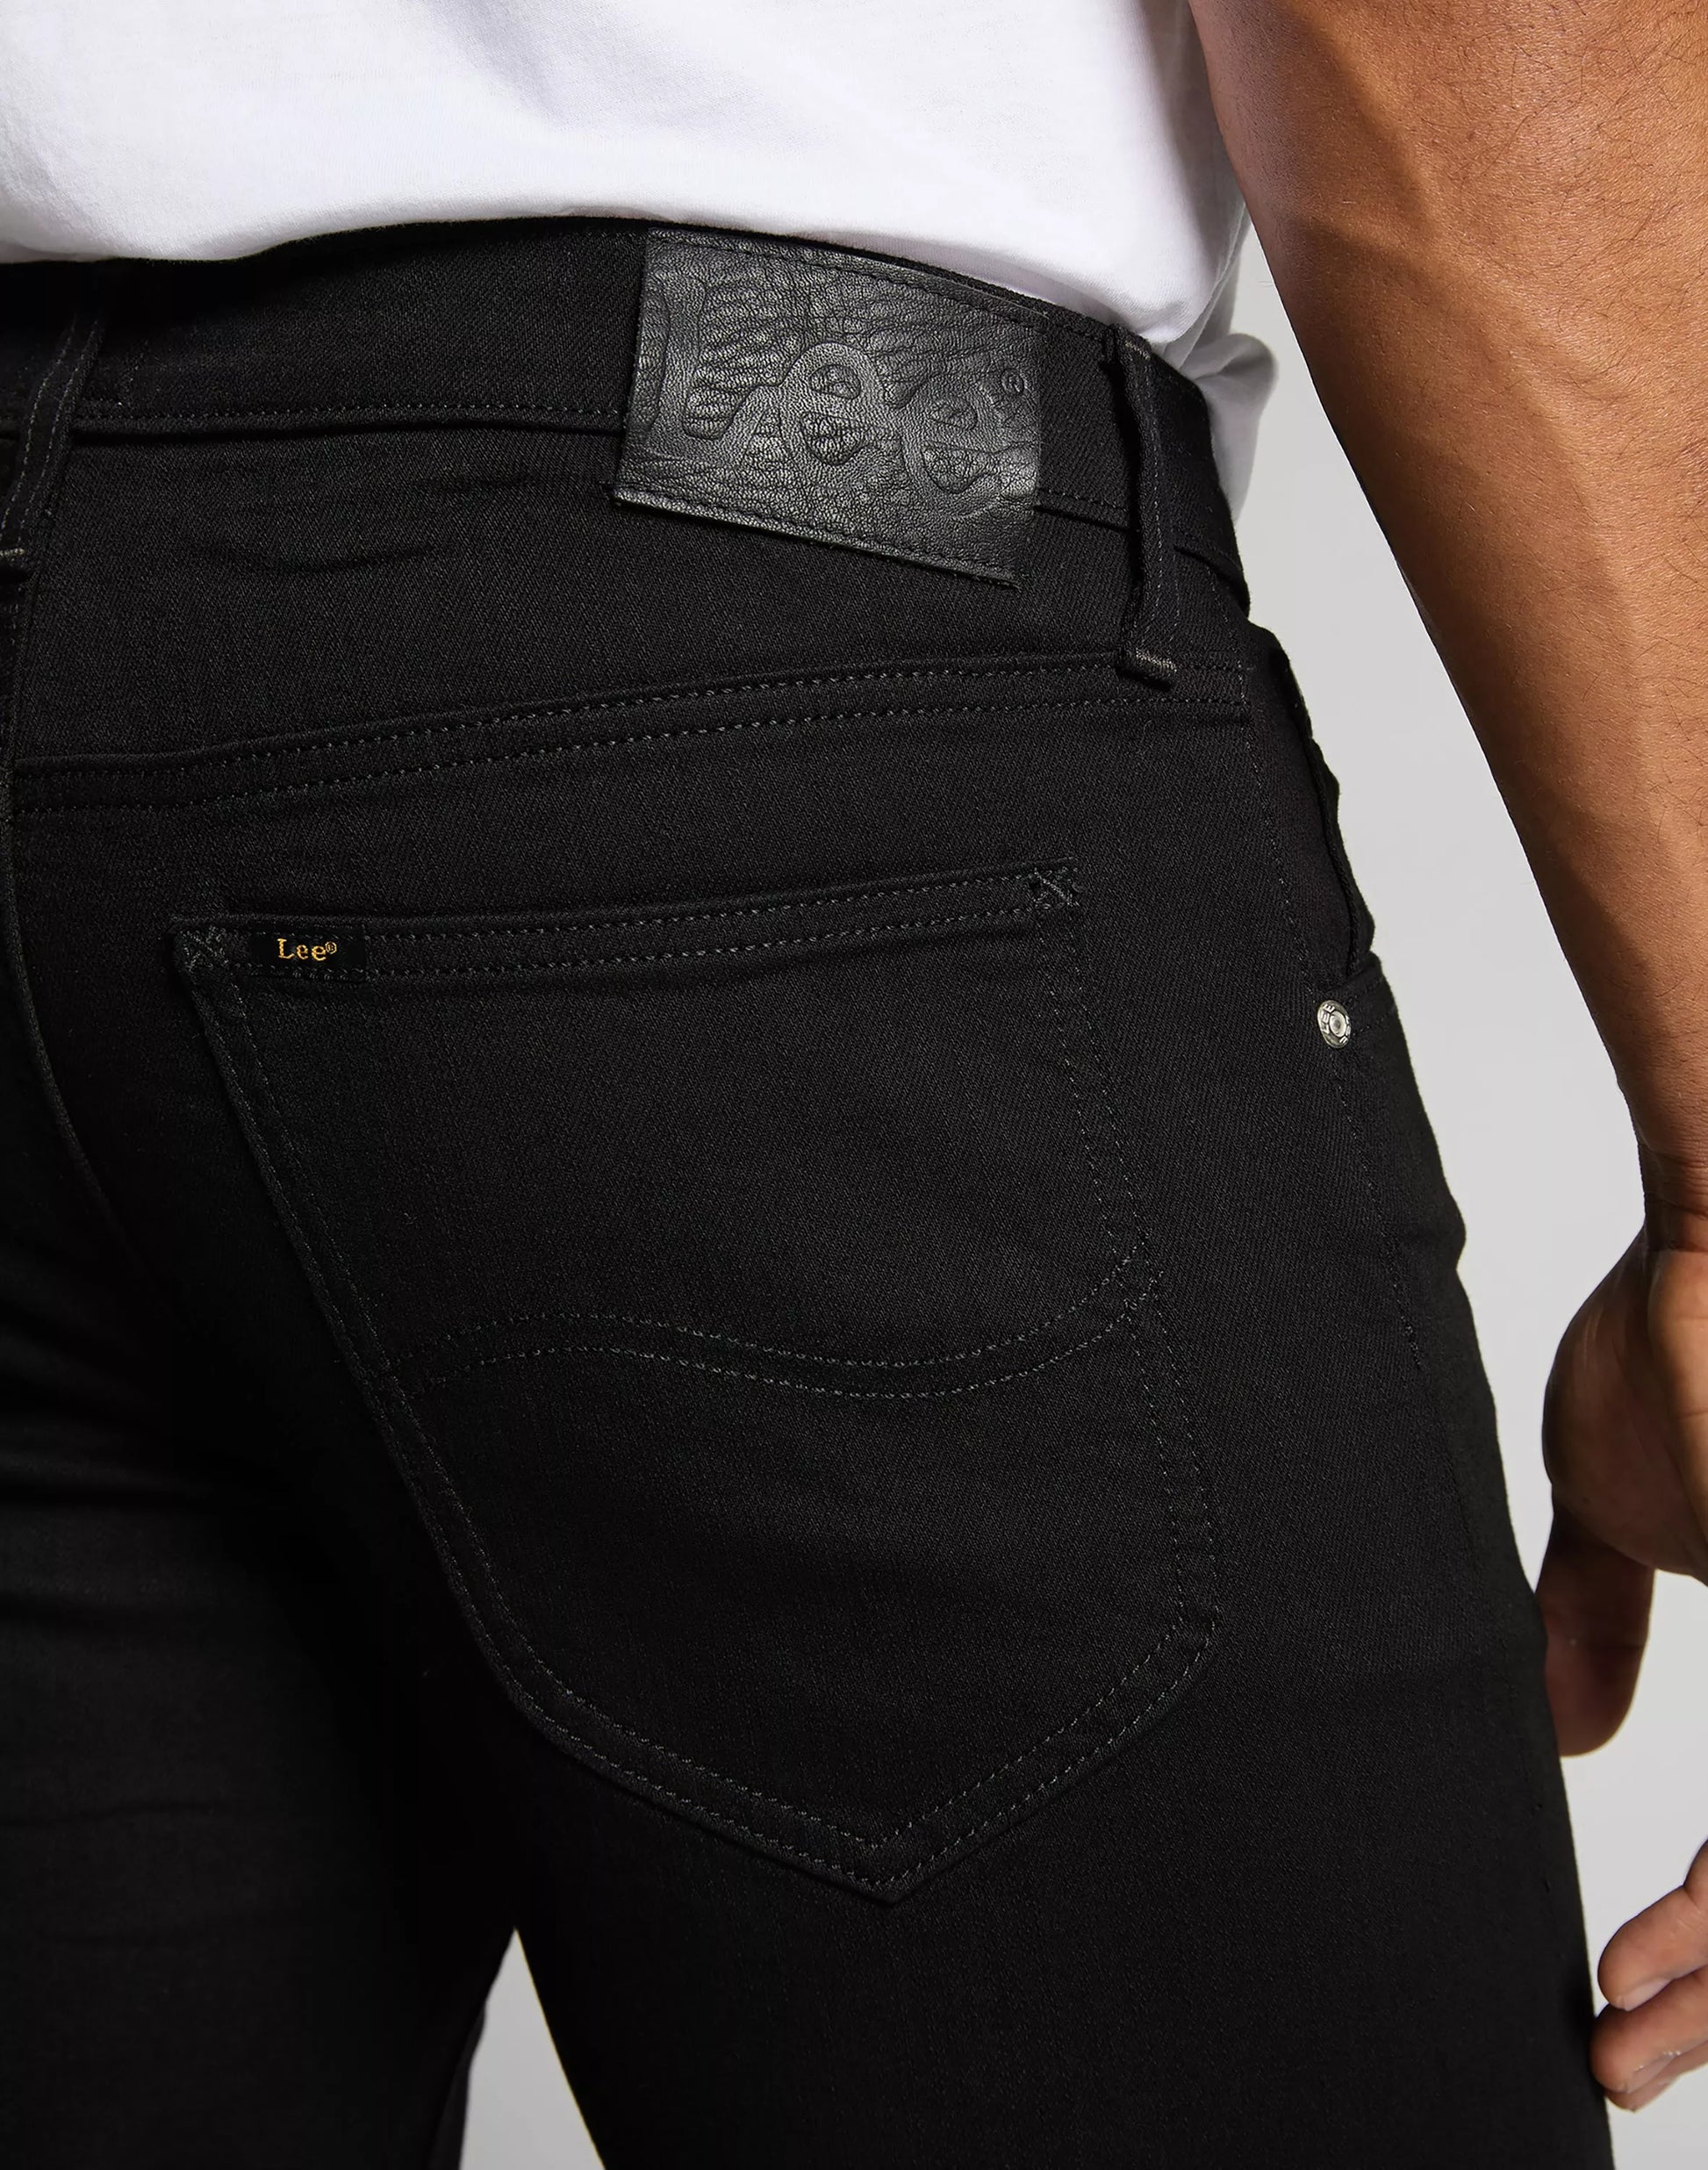 Lee Jeans Rider Slim Fit Black - RD1 Clothing